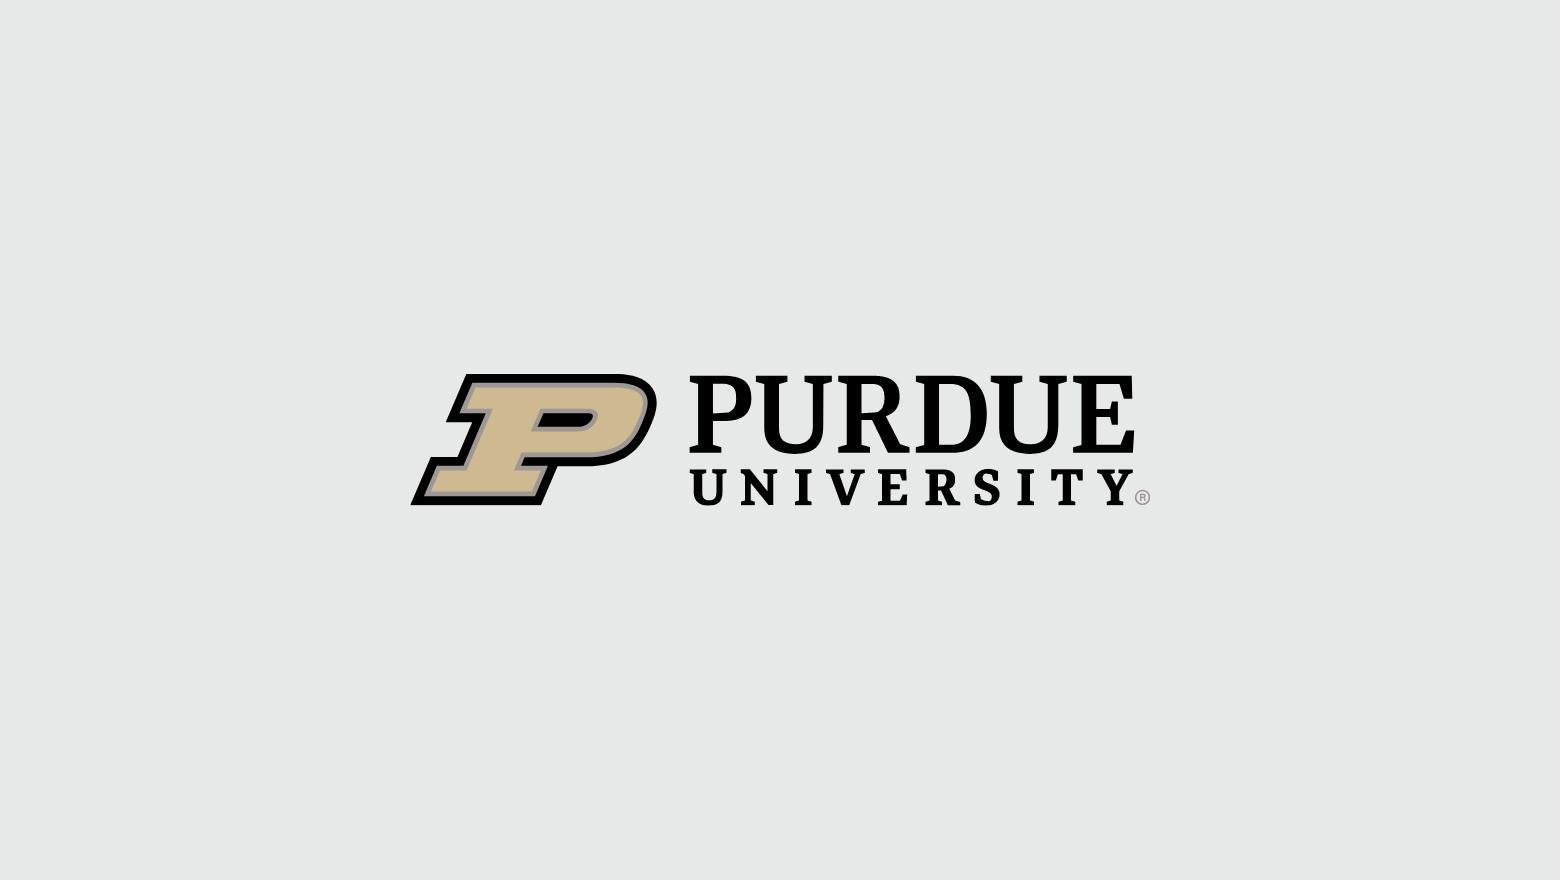 Purdue University's logo